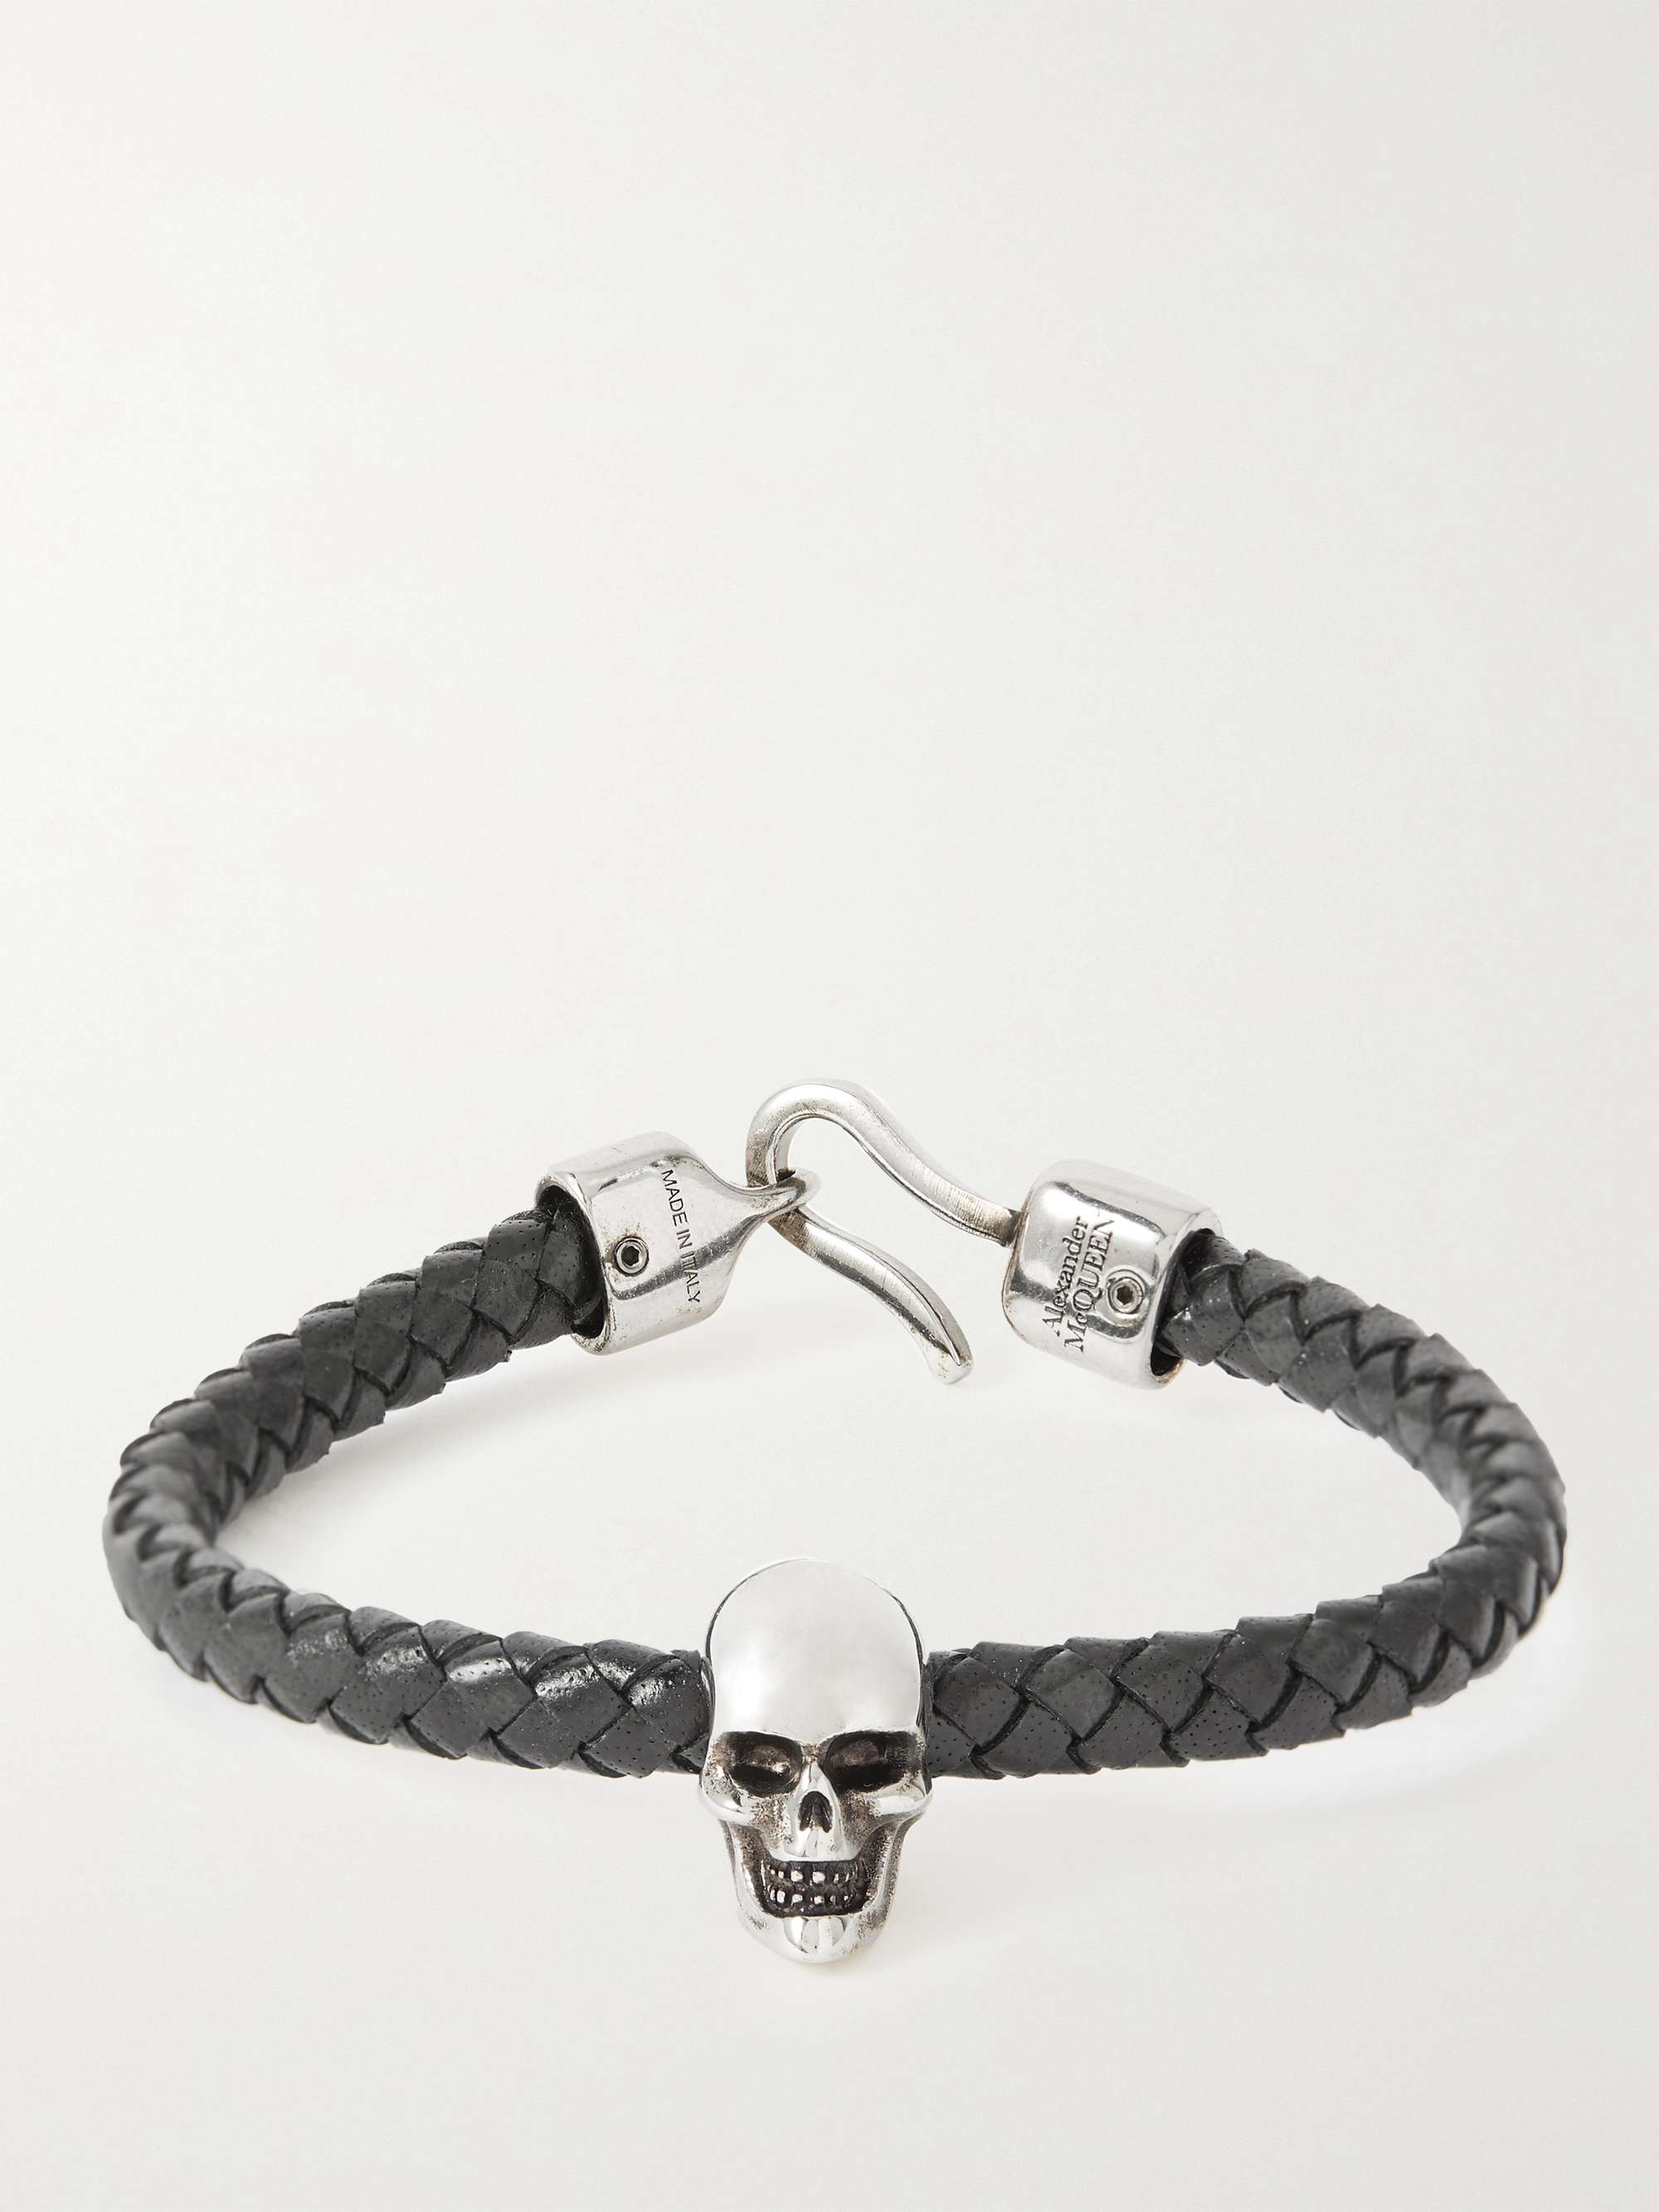 ALEXANDER MCQUEEN Skull Woven Leather and Silver-Tone Bracelet | MR PORTER